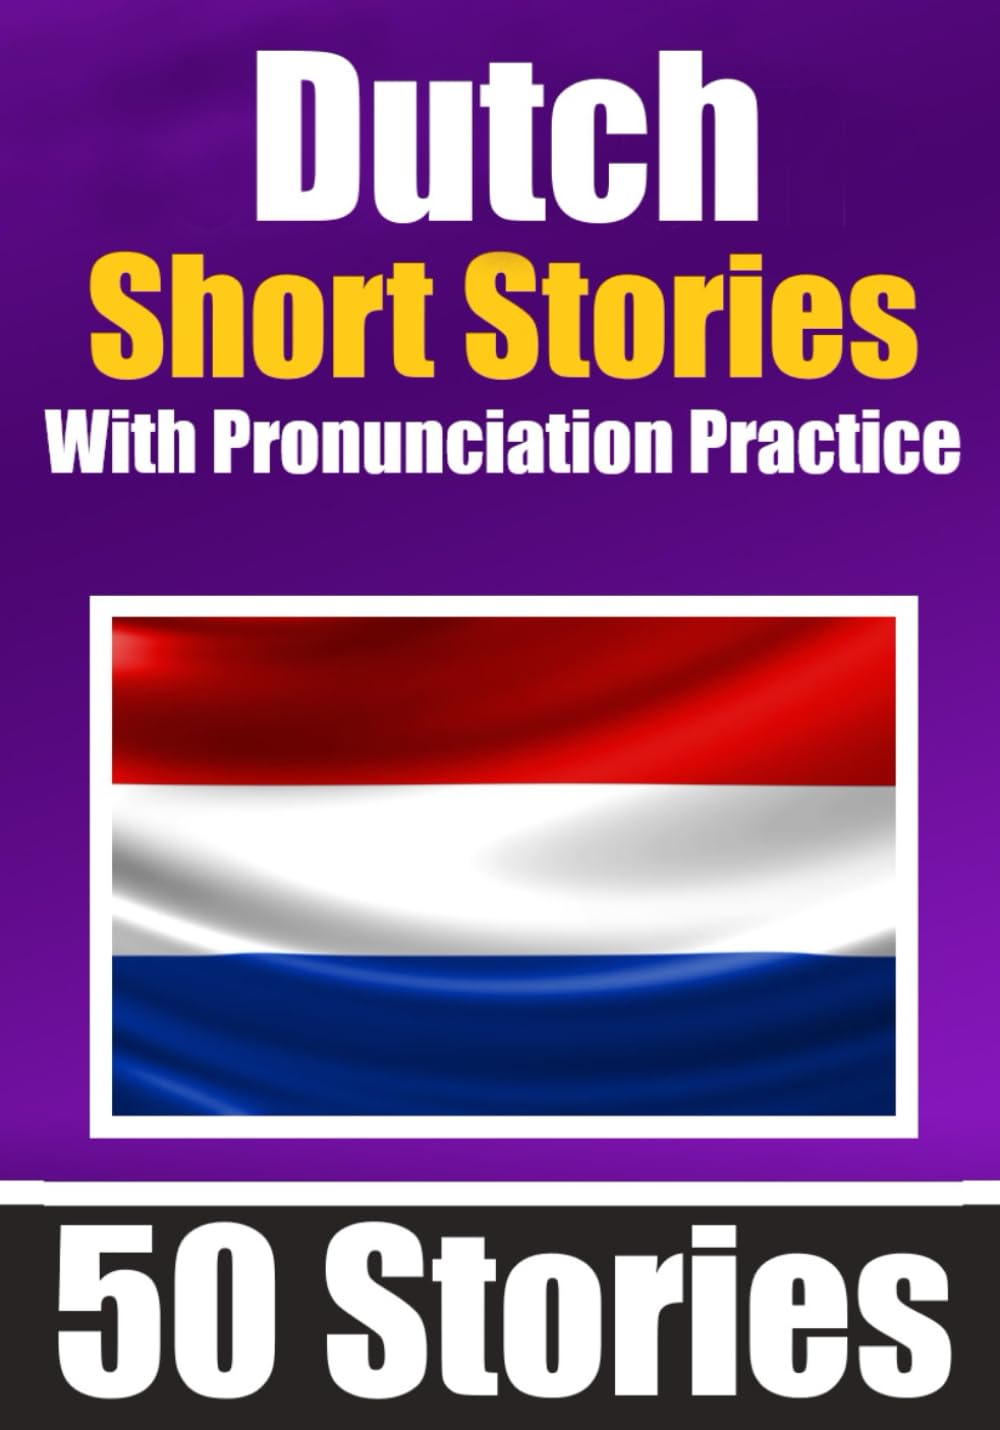 50 Short Stories in Dutch with Pronunciation Practice - Skriuwer.com